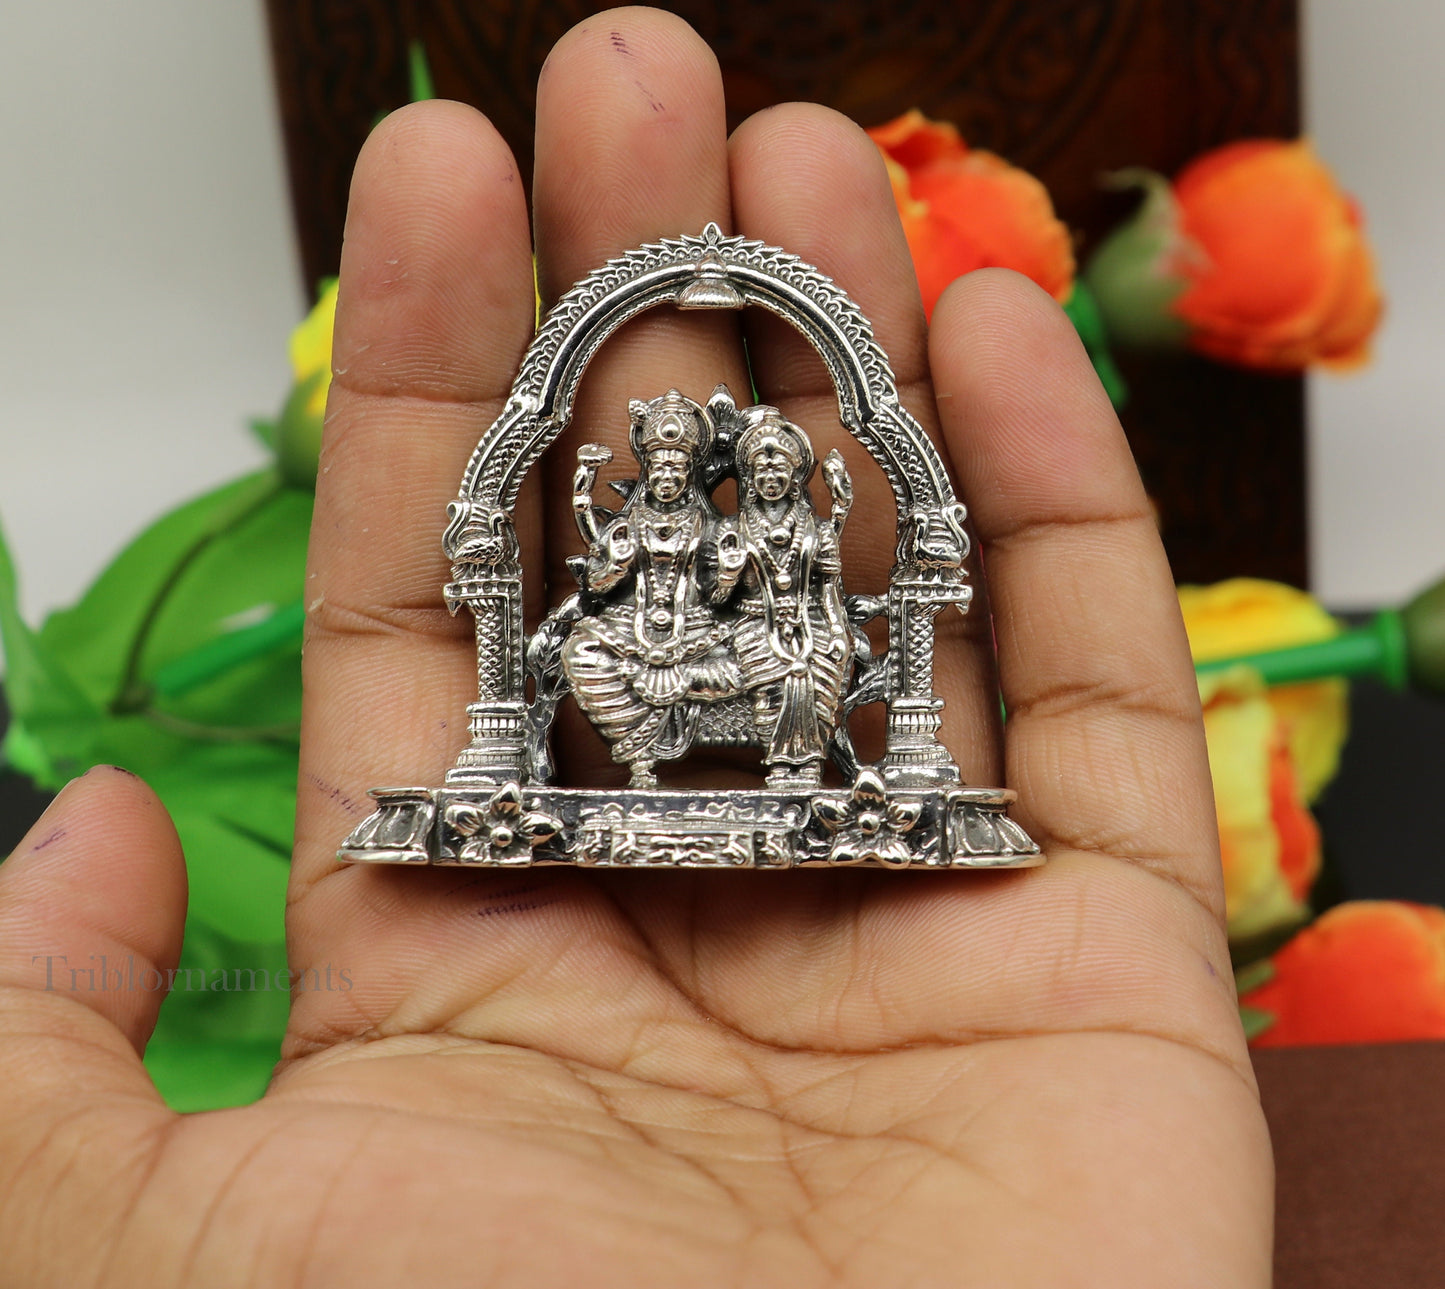 925 Sterling silver handmade floral design Indian Idols Laxmi Narayan, laxmi and vishnu Statue figurine, puja articles puja articles art165 - TRIBAL ORNAMENTS